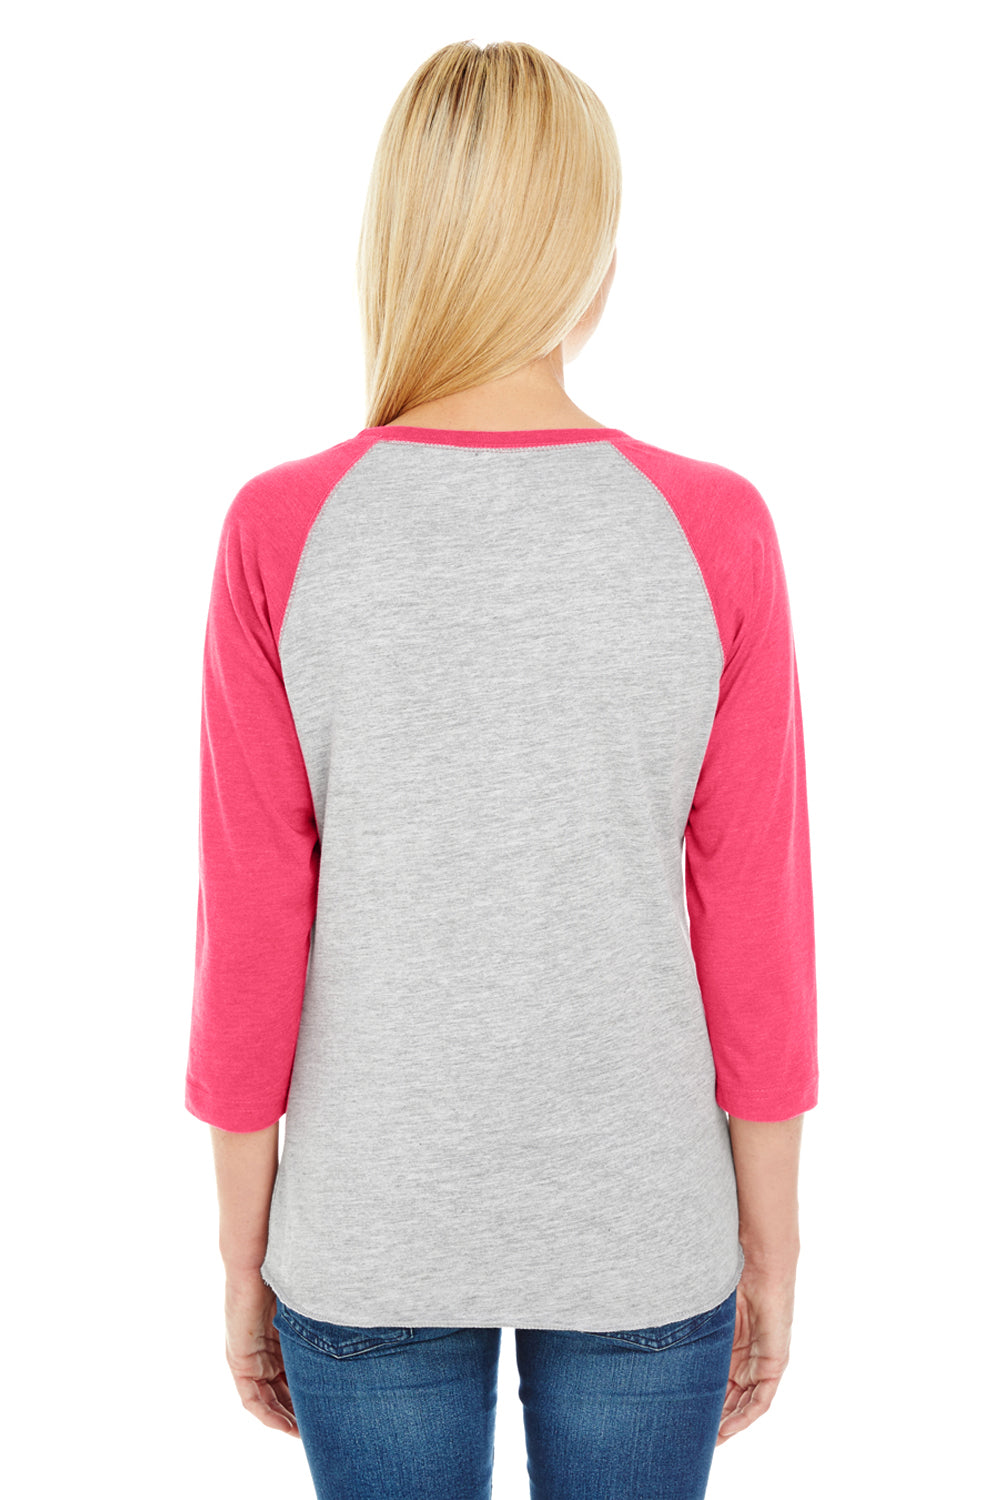 LAT LA3530 Womens Fine Jersey 3/4 Sleeve Crewneck T-Shirt Heather Grey/Pink Back